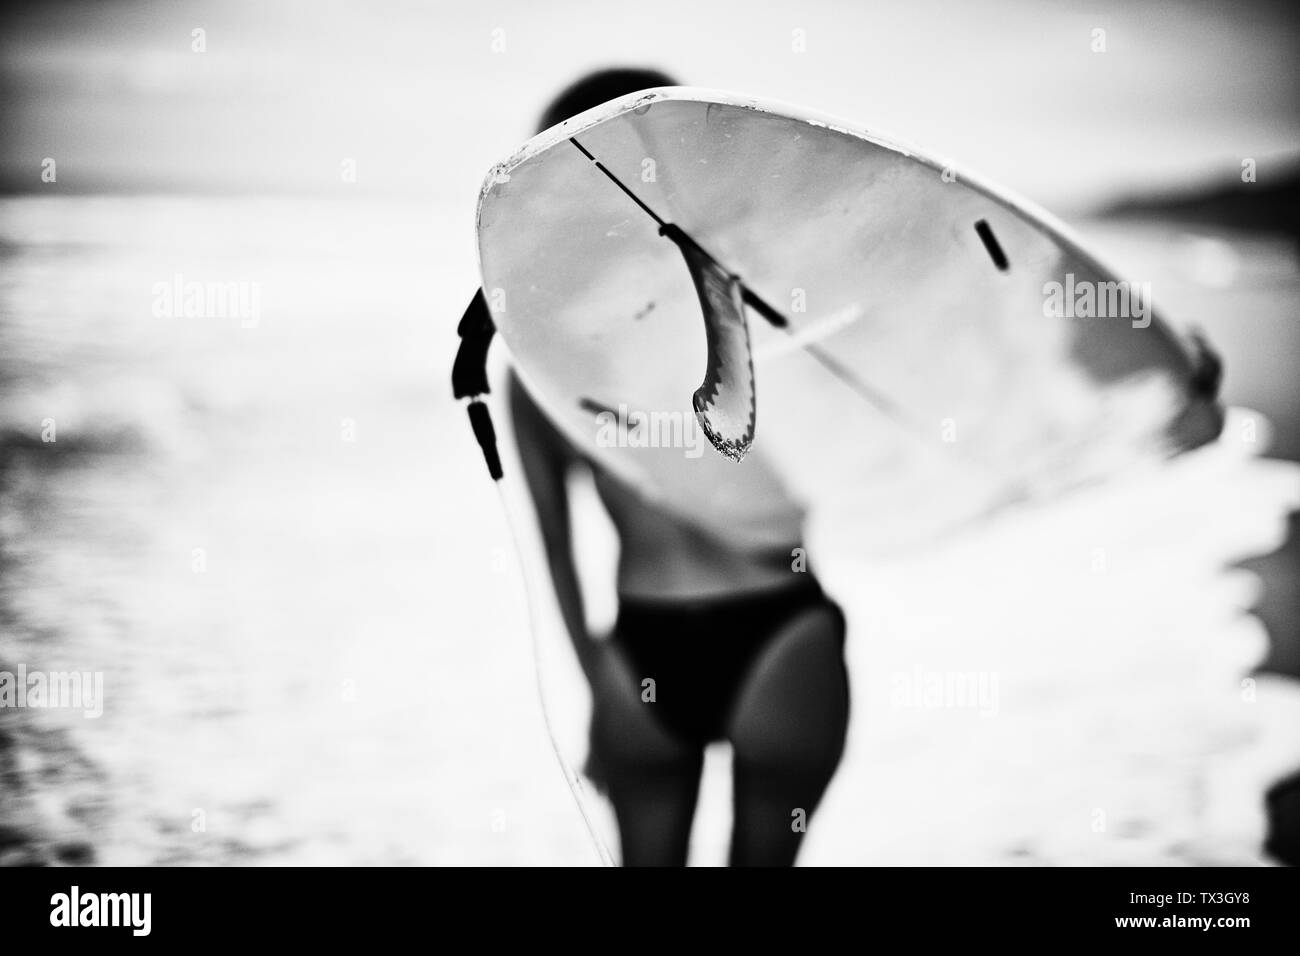 Female surfer carrying surfboard on ocean beach Stock Photo